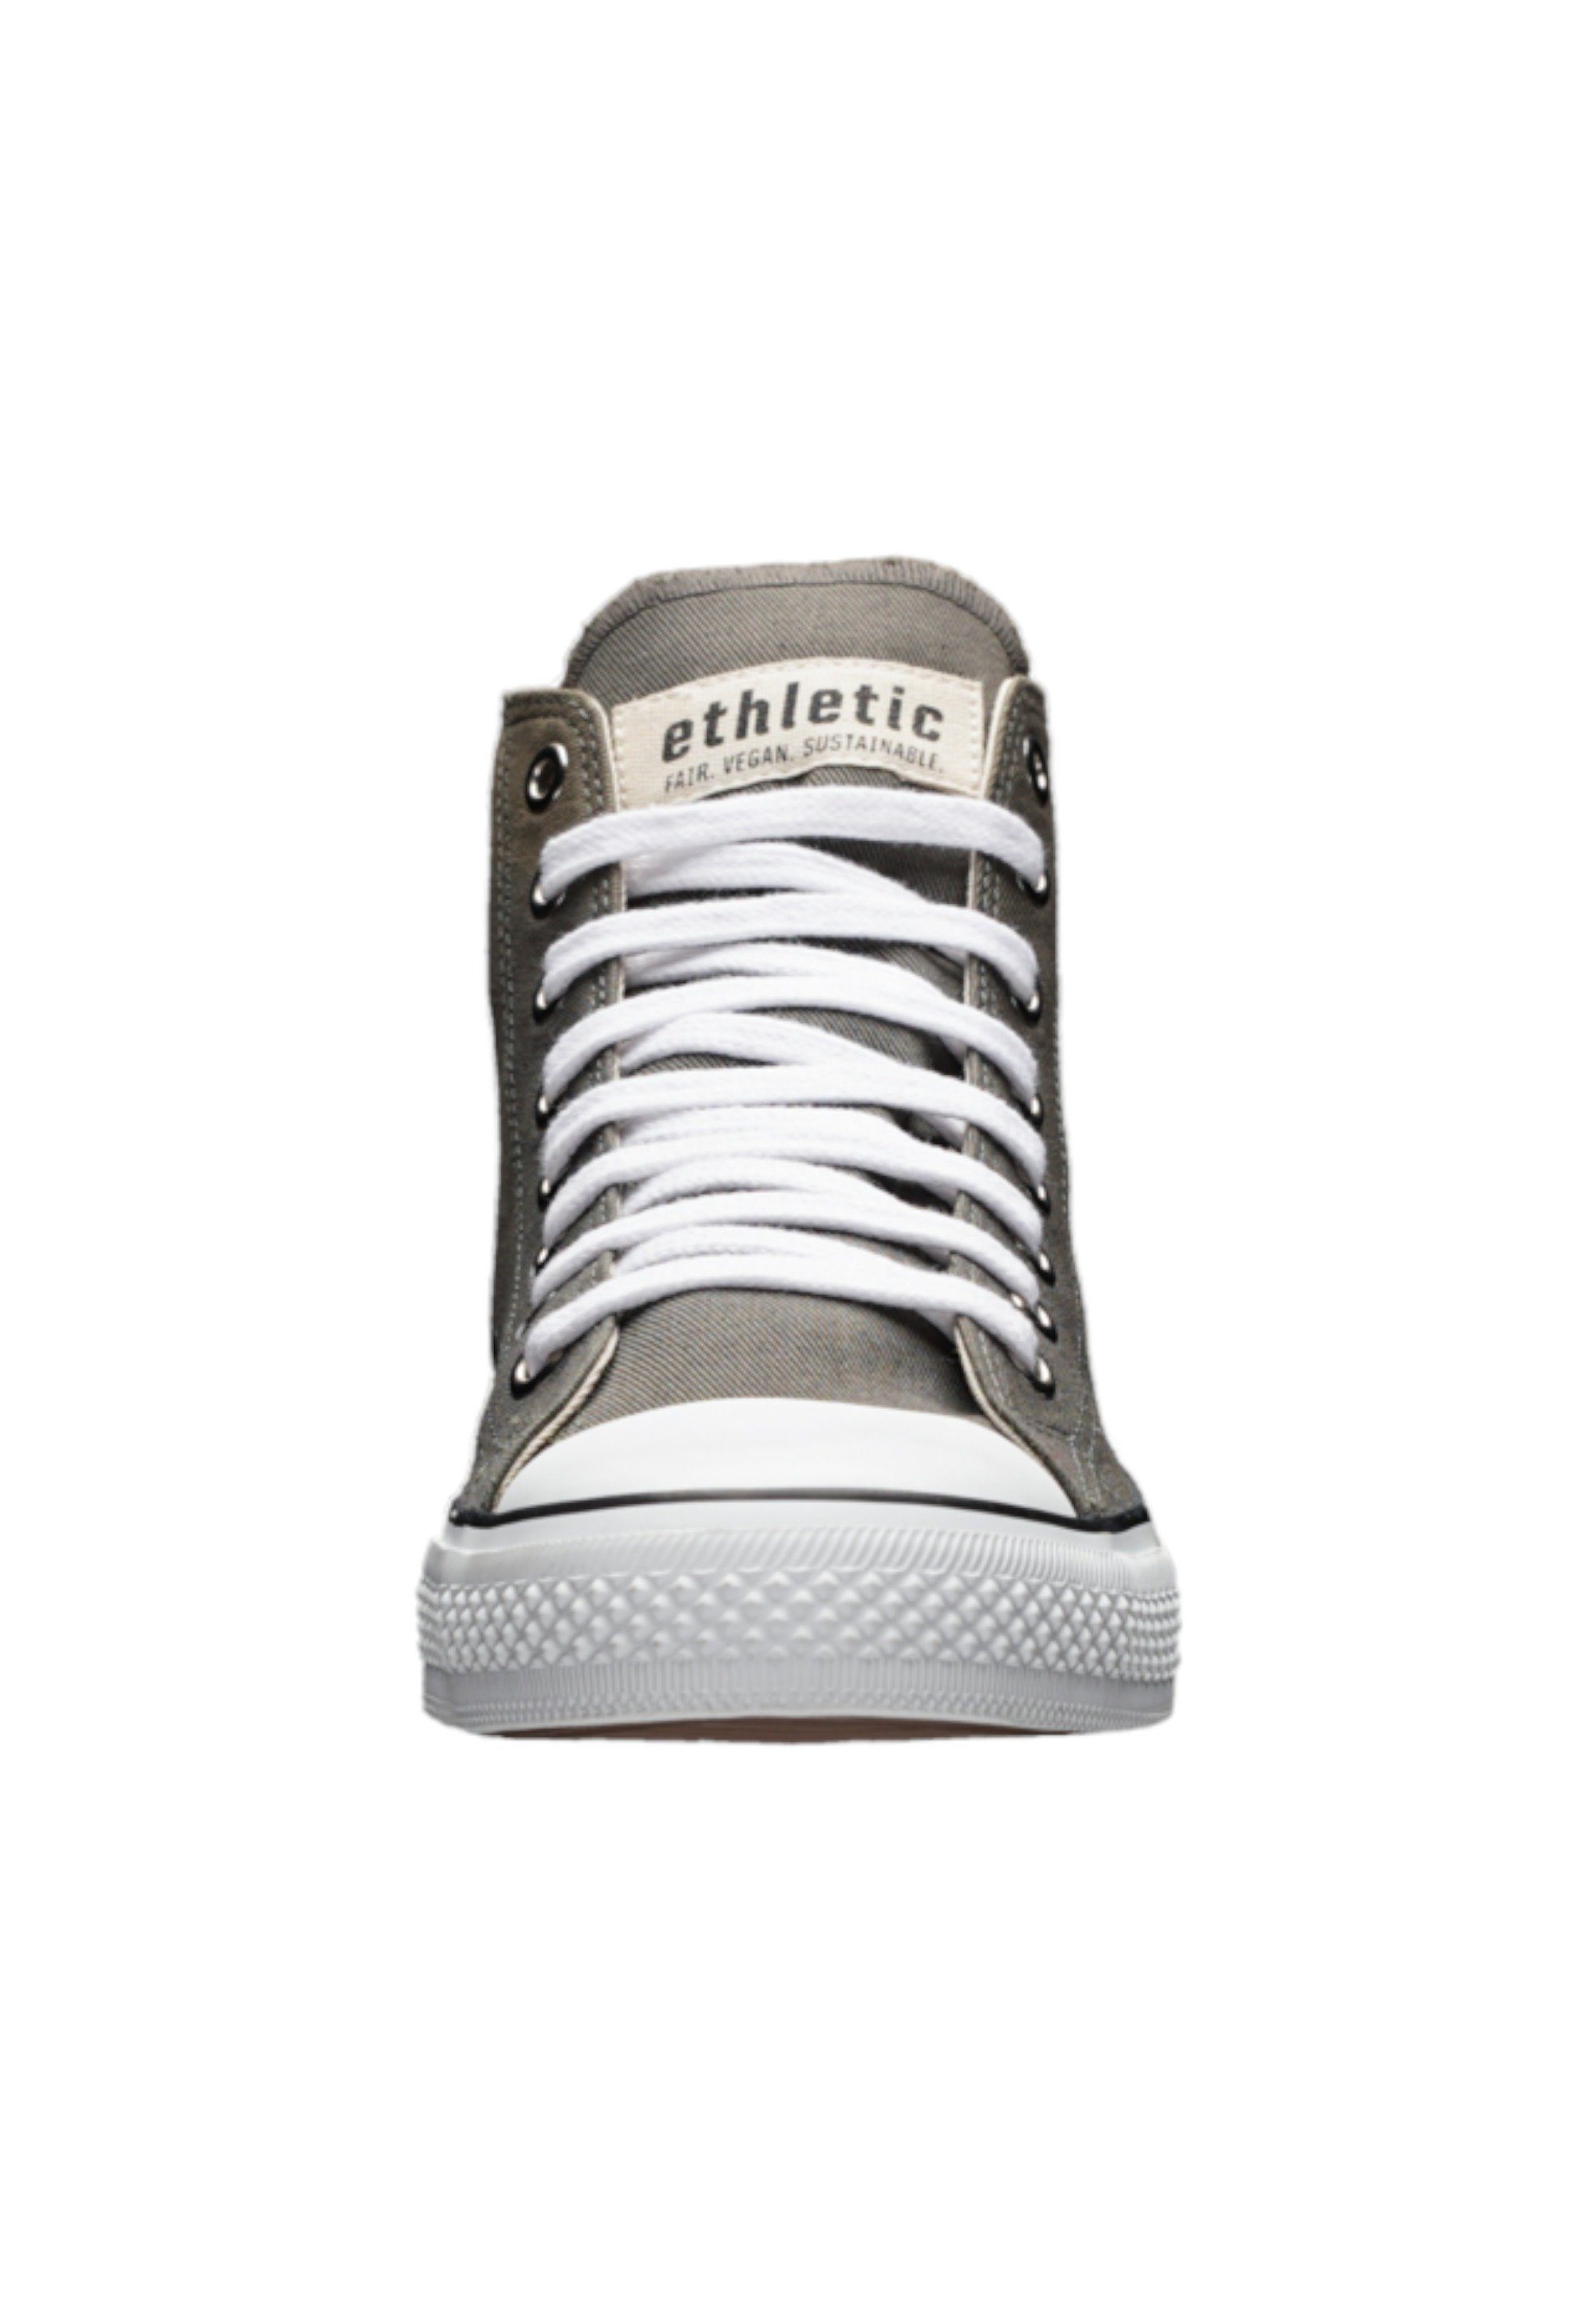 ETHLETIC White Cap Hi Grey Just Sneaker Fairtrade - Produkt White Donkey Cut